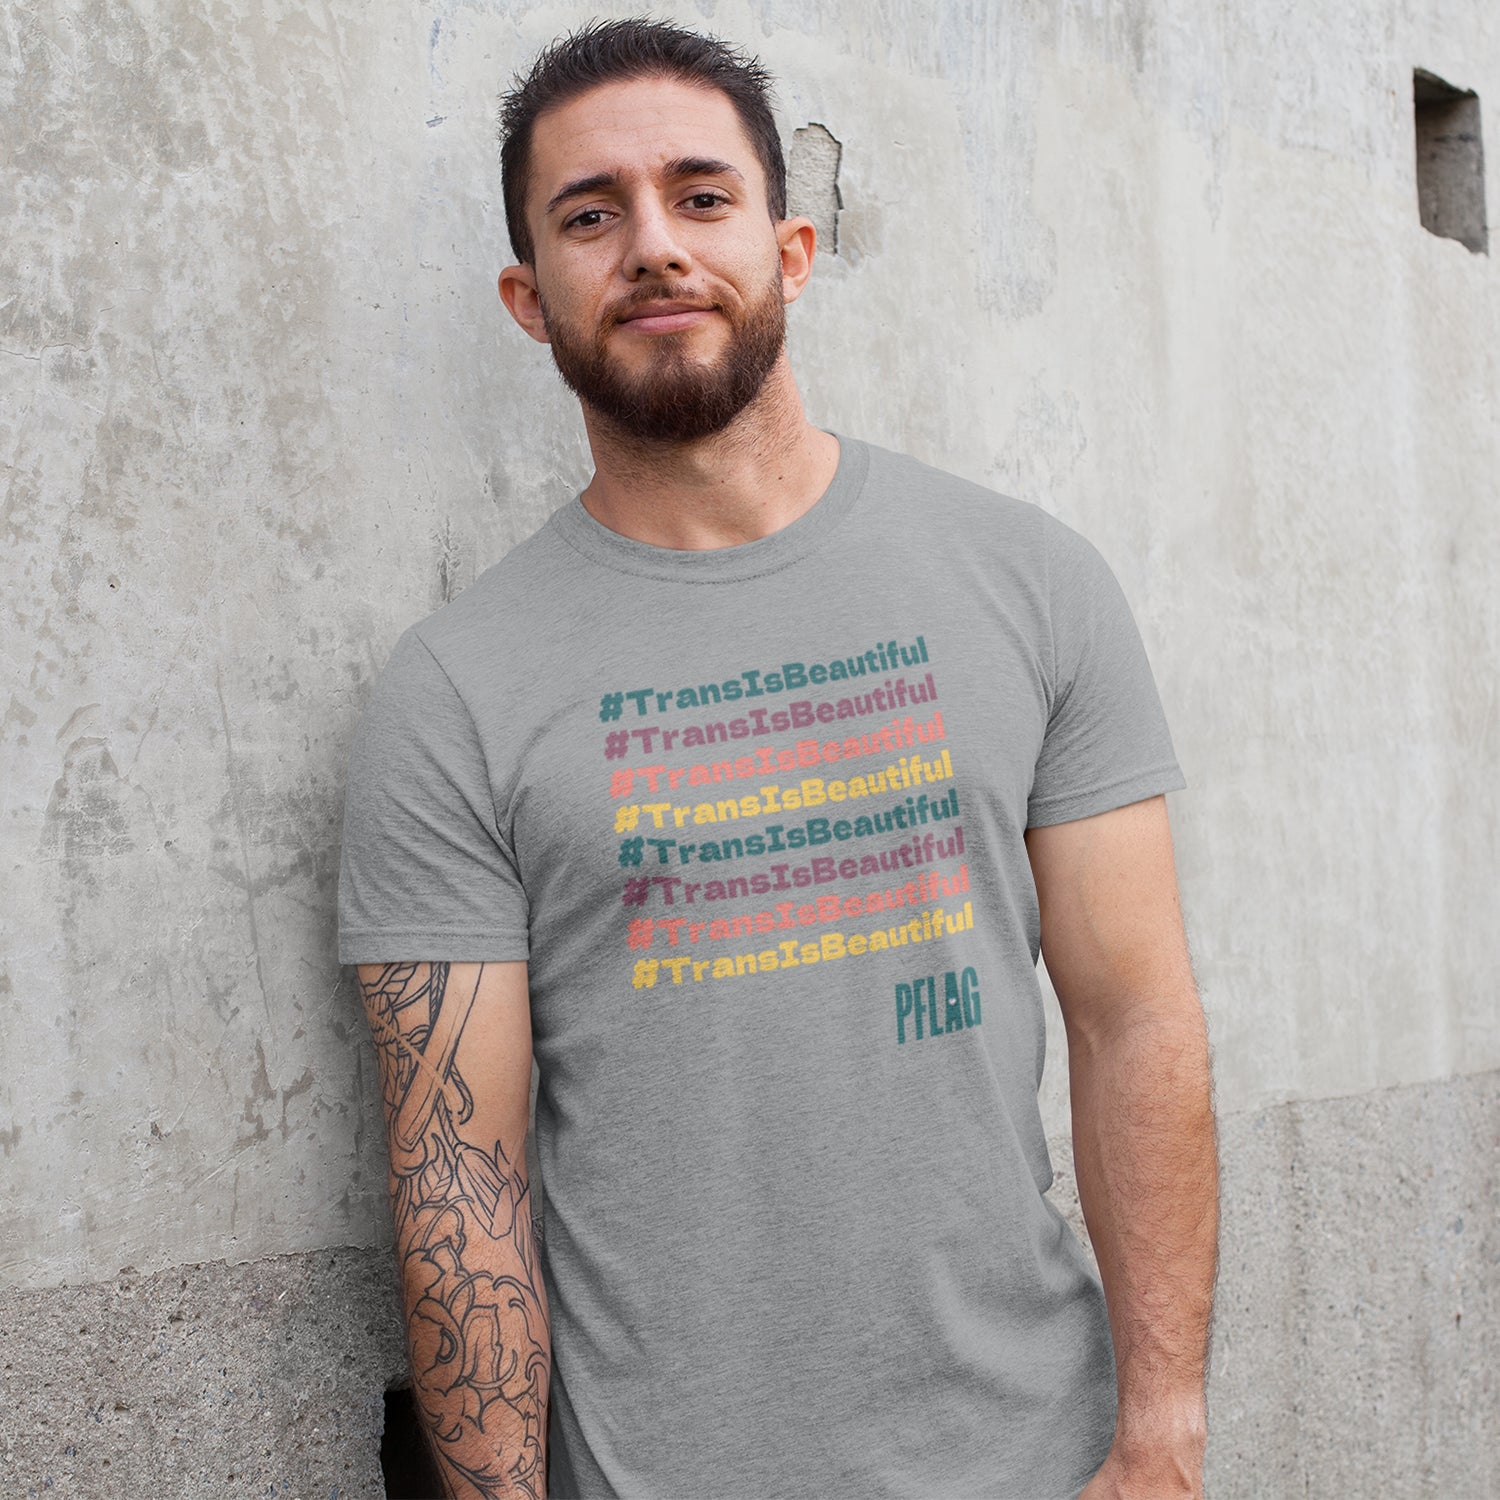 #TransIsBeautiful - PFLAG Colorway - Wide-Cut Crewneck Short Sleeve T-Shirt